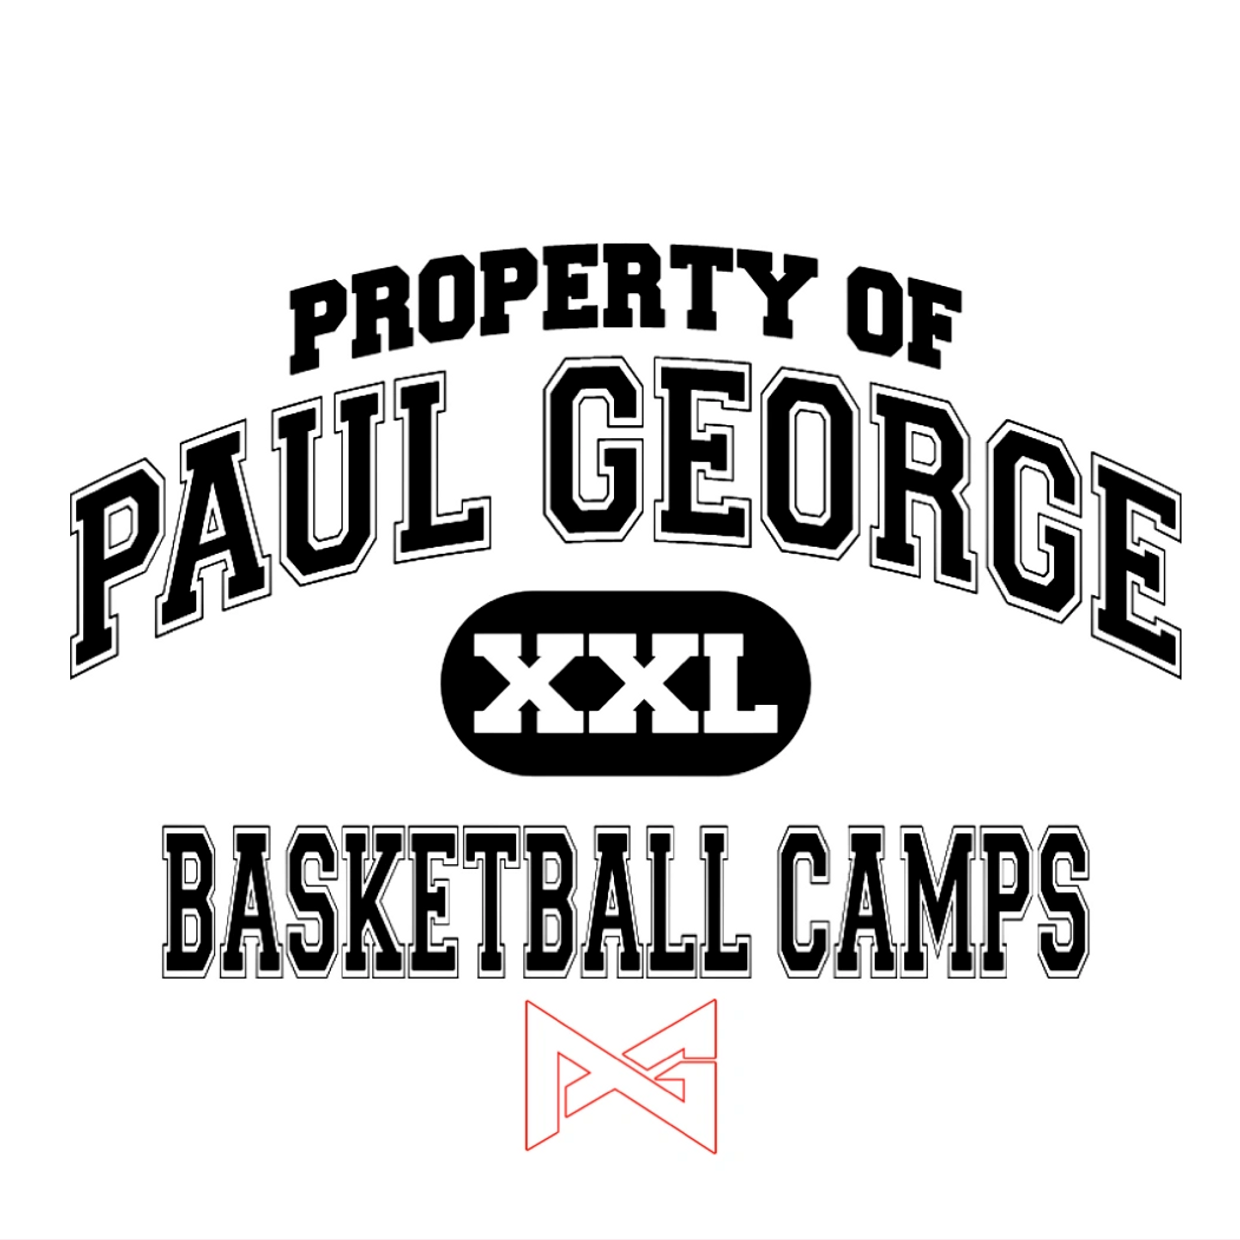 Paul George Elite Basketball - Basketball Team, Youth Travel Team